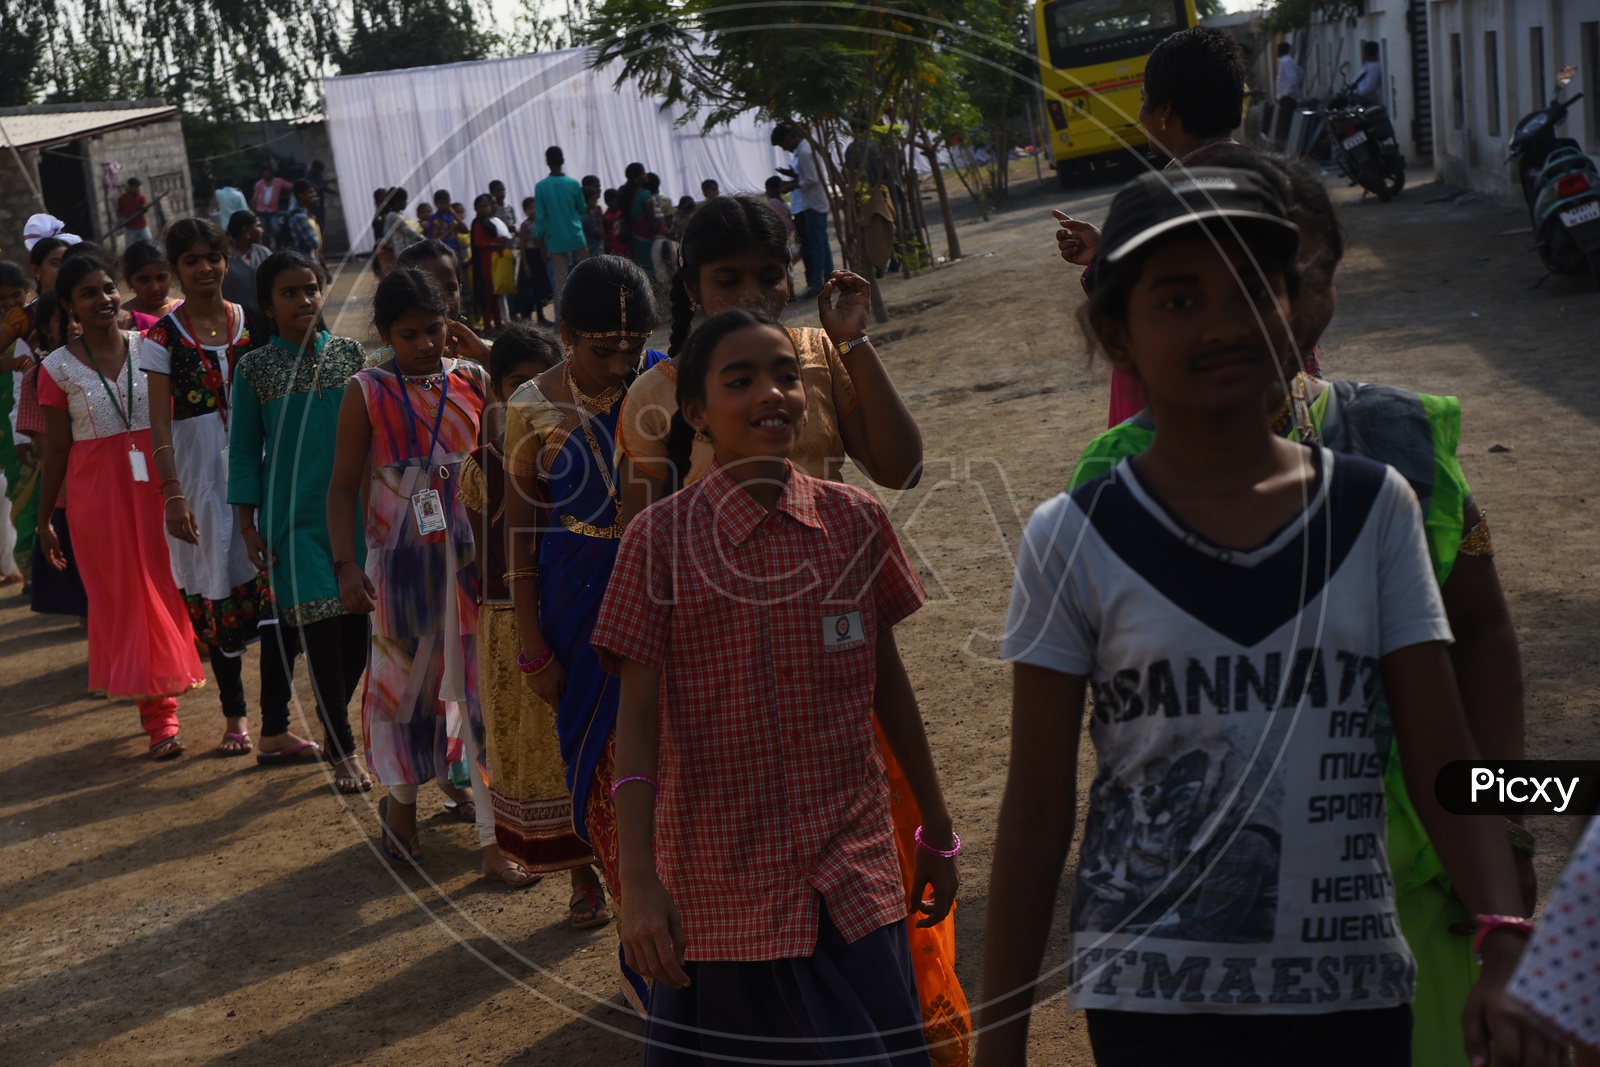 School kids walking in a queue